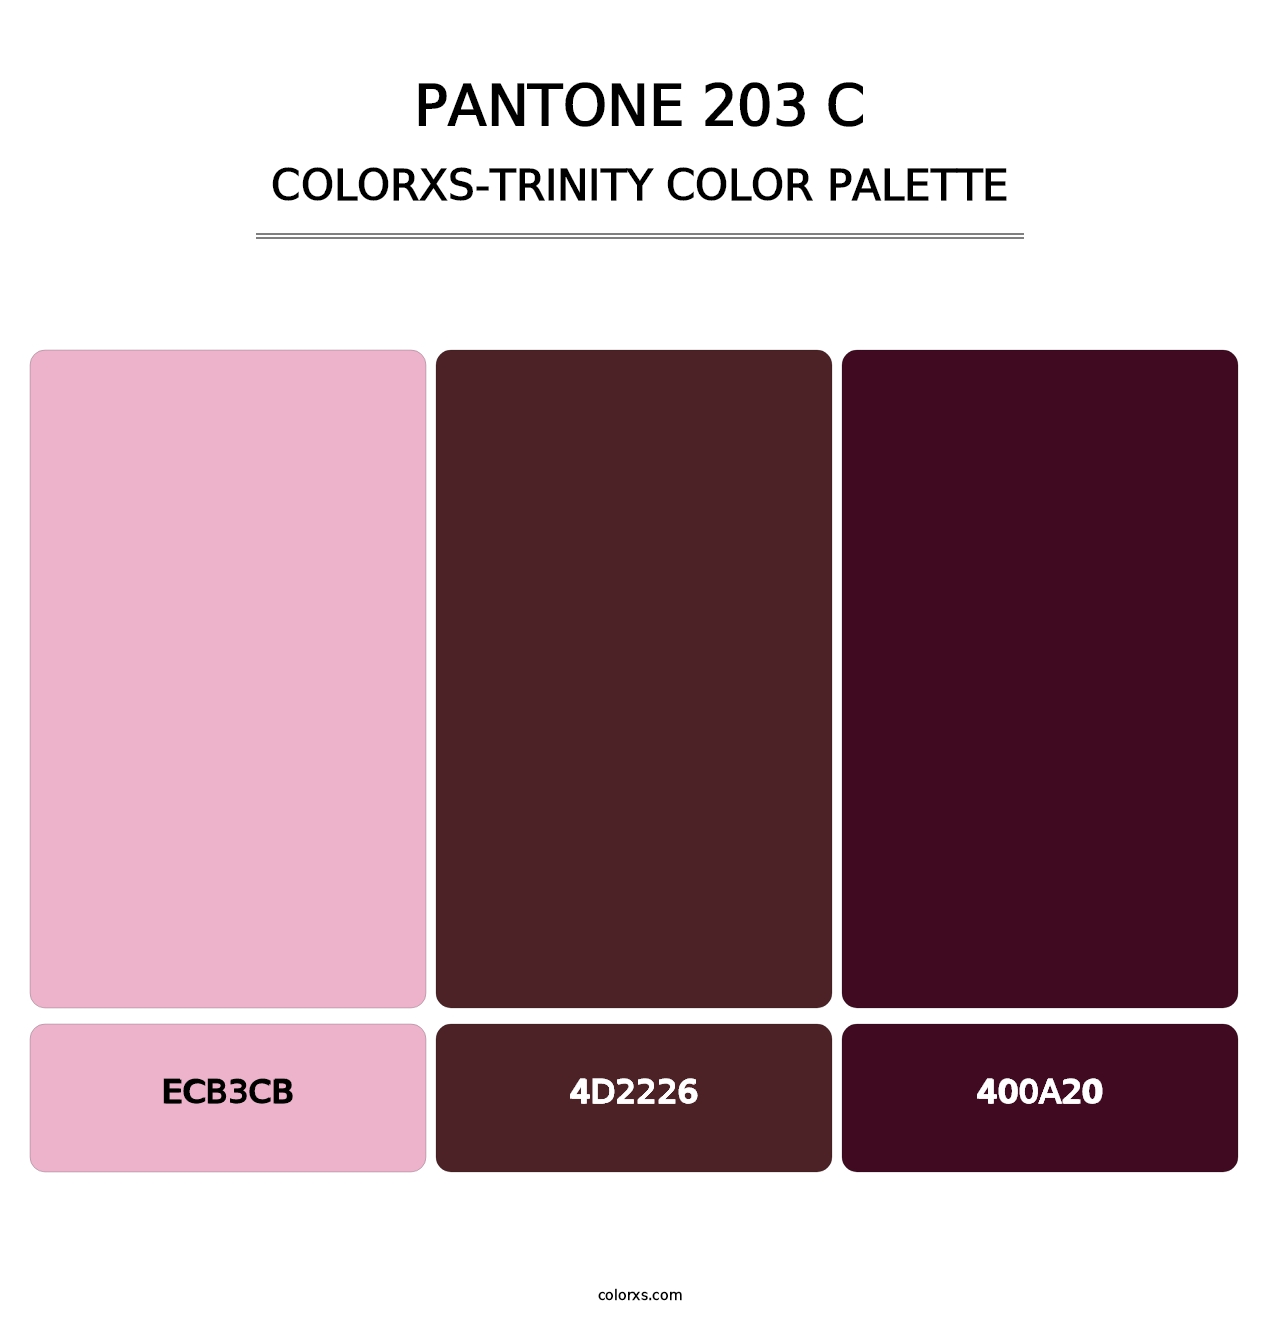 PANTONE 203 C - Colorxs Trinity Palette